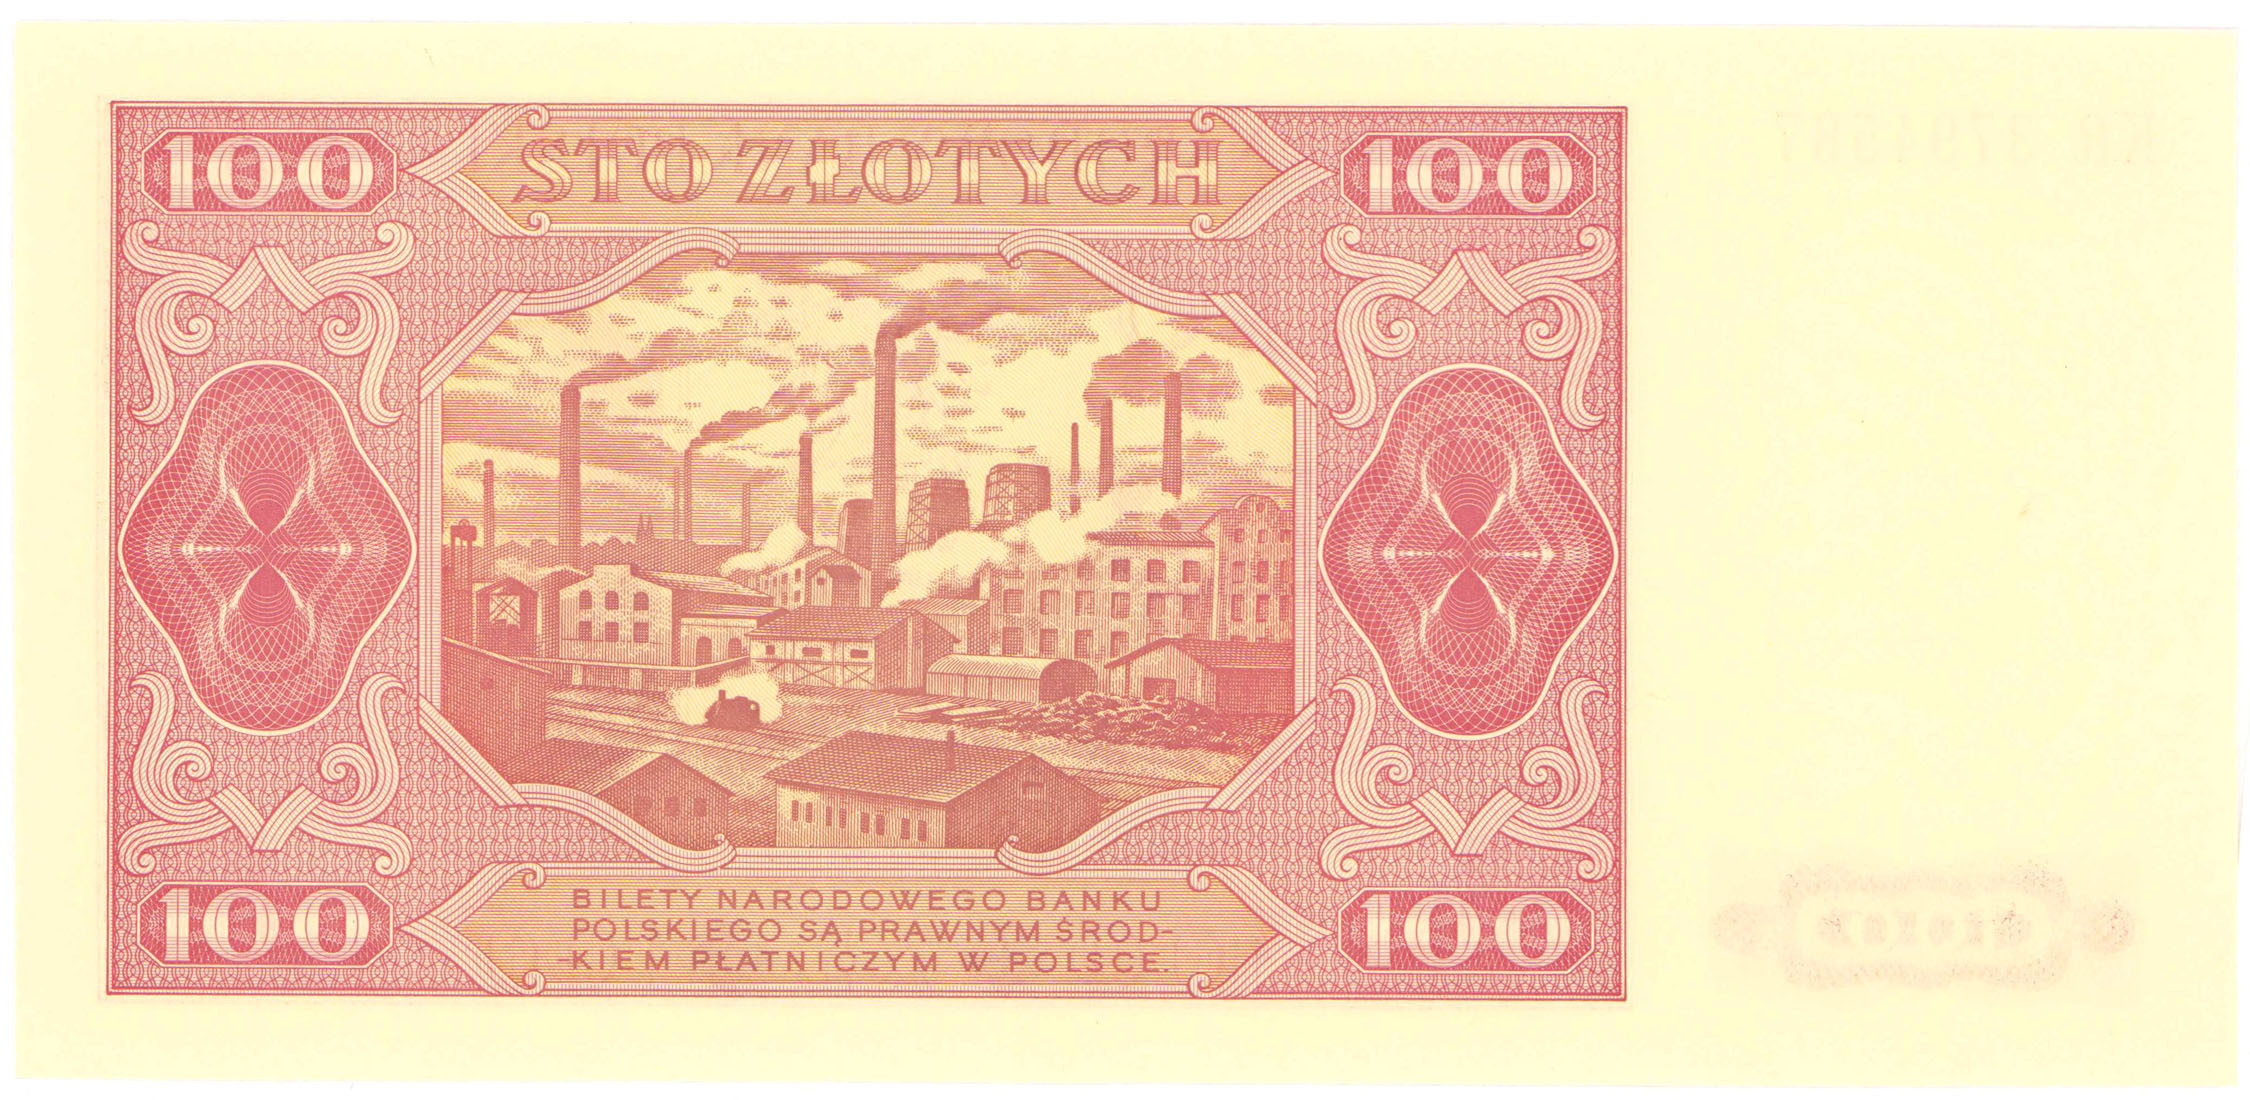 100 złotych 1948 seria KR - PIĘKNE